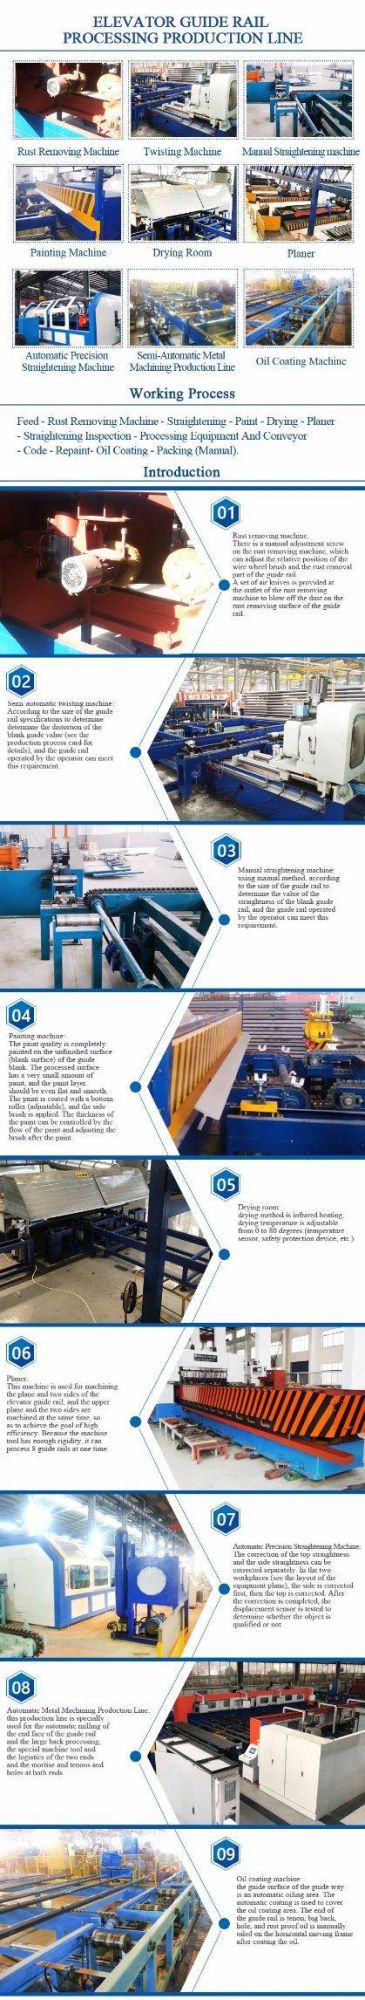 Metal Roller Shutter Door Popular Customized Elevator Guide Rail Production Line Machine